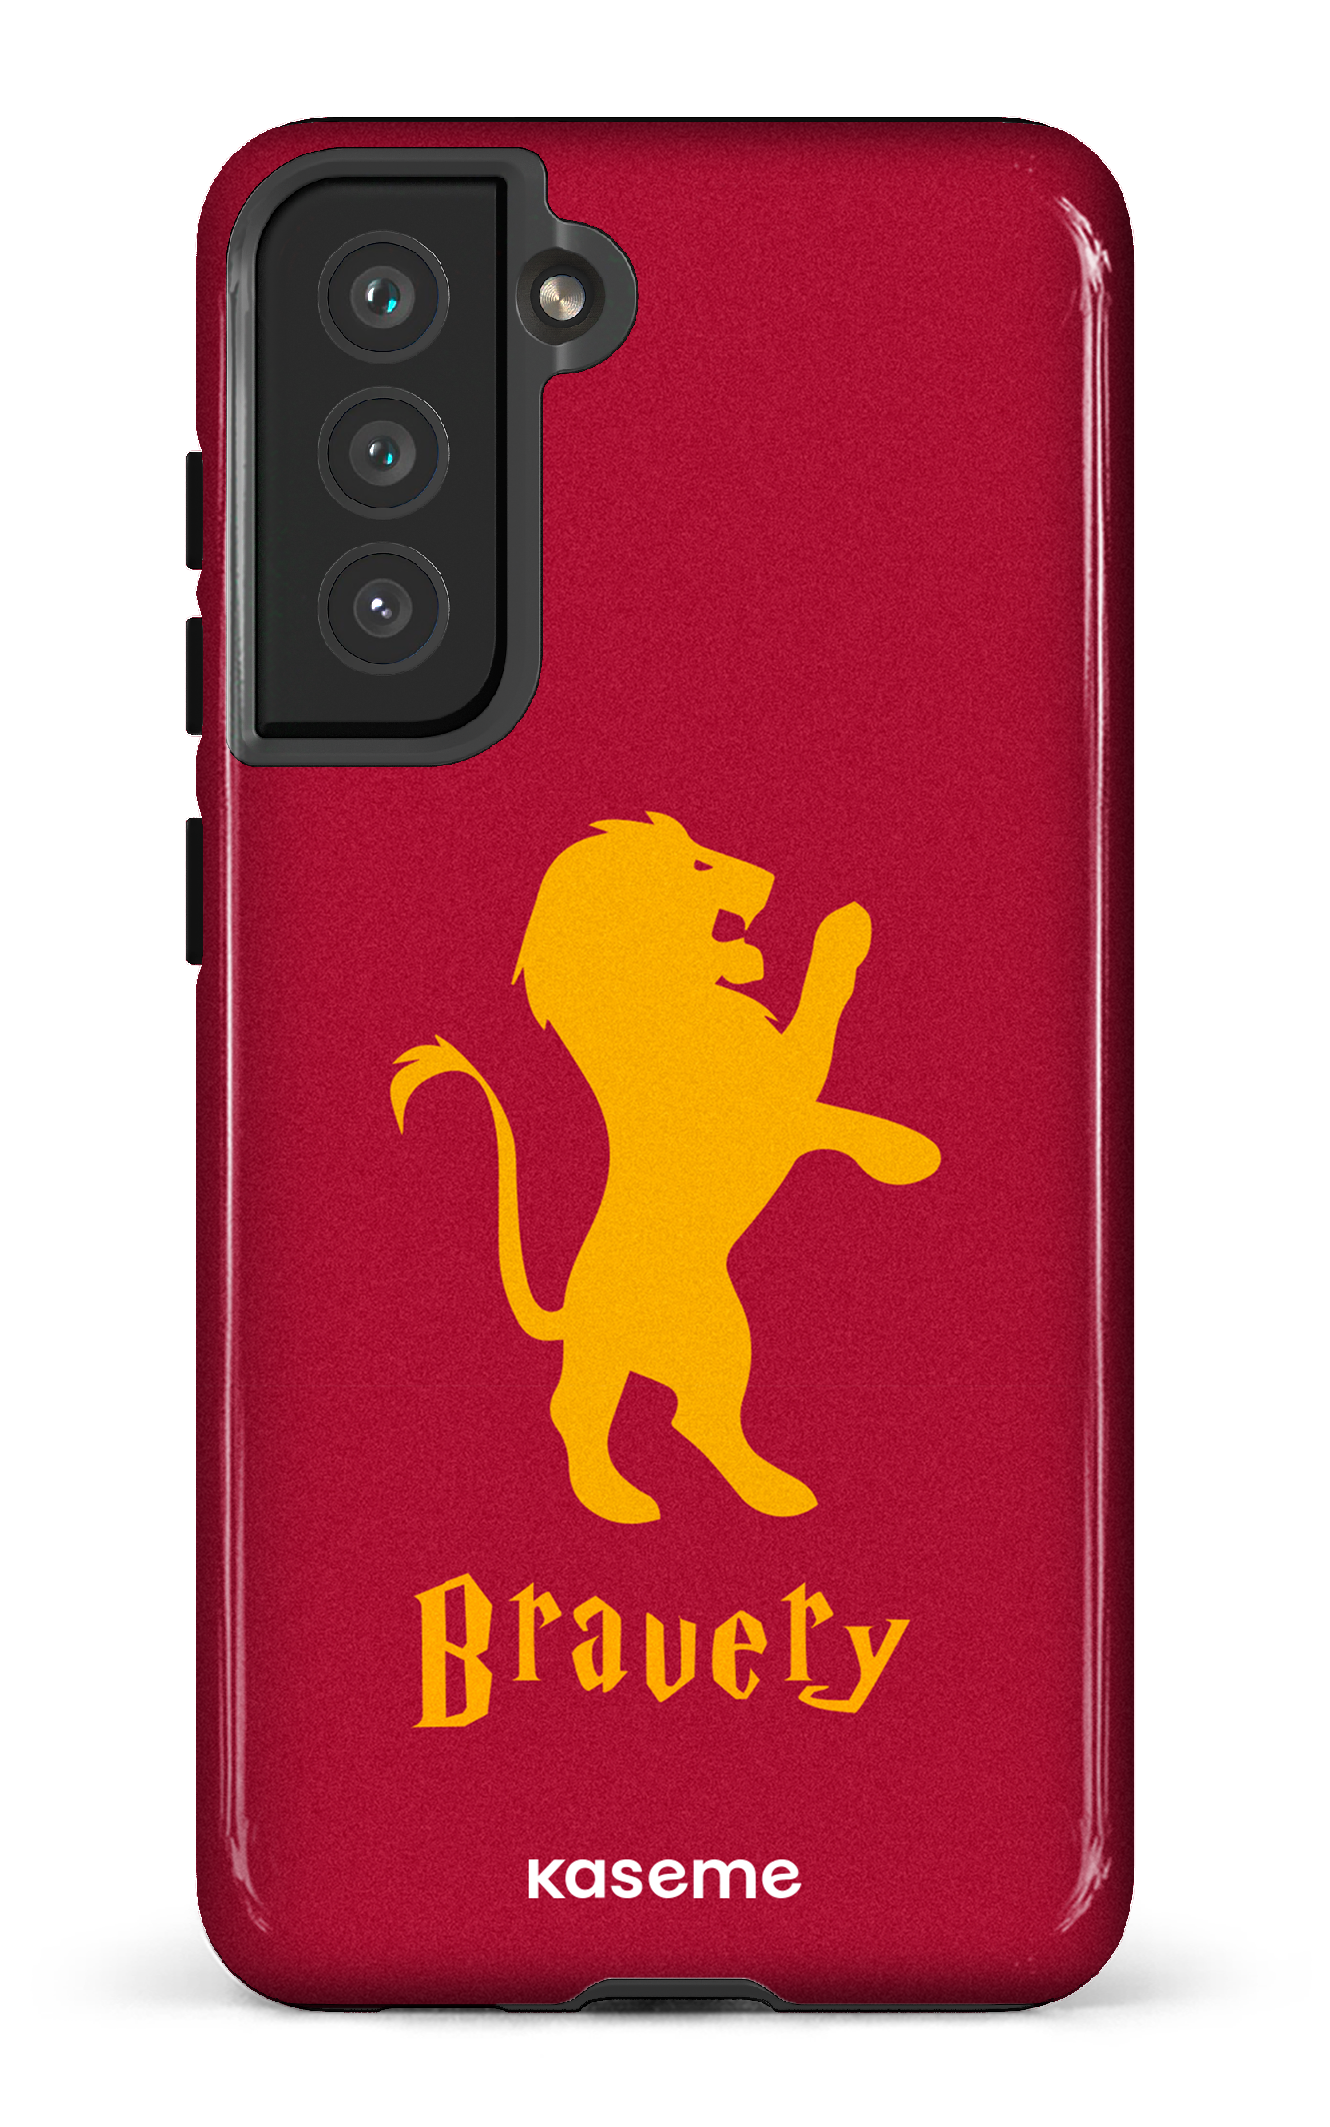 Bravery - Galaxy S21 FE